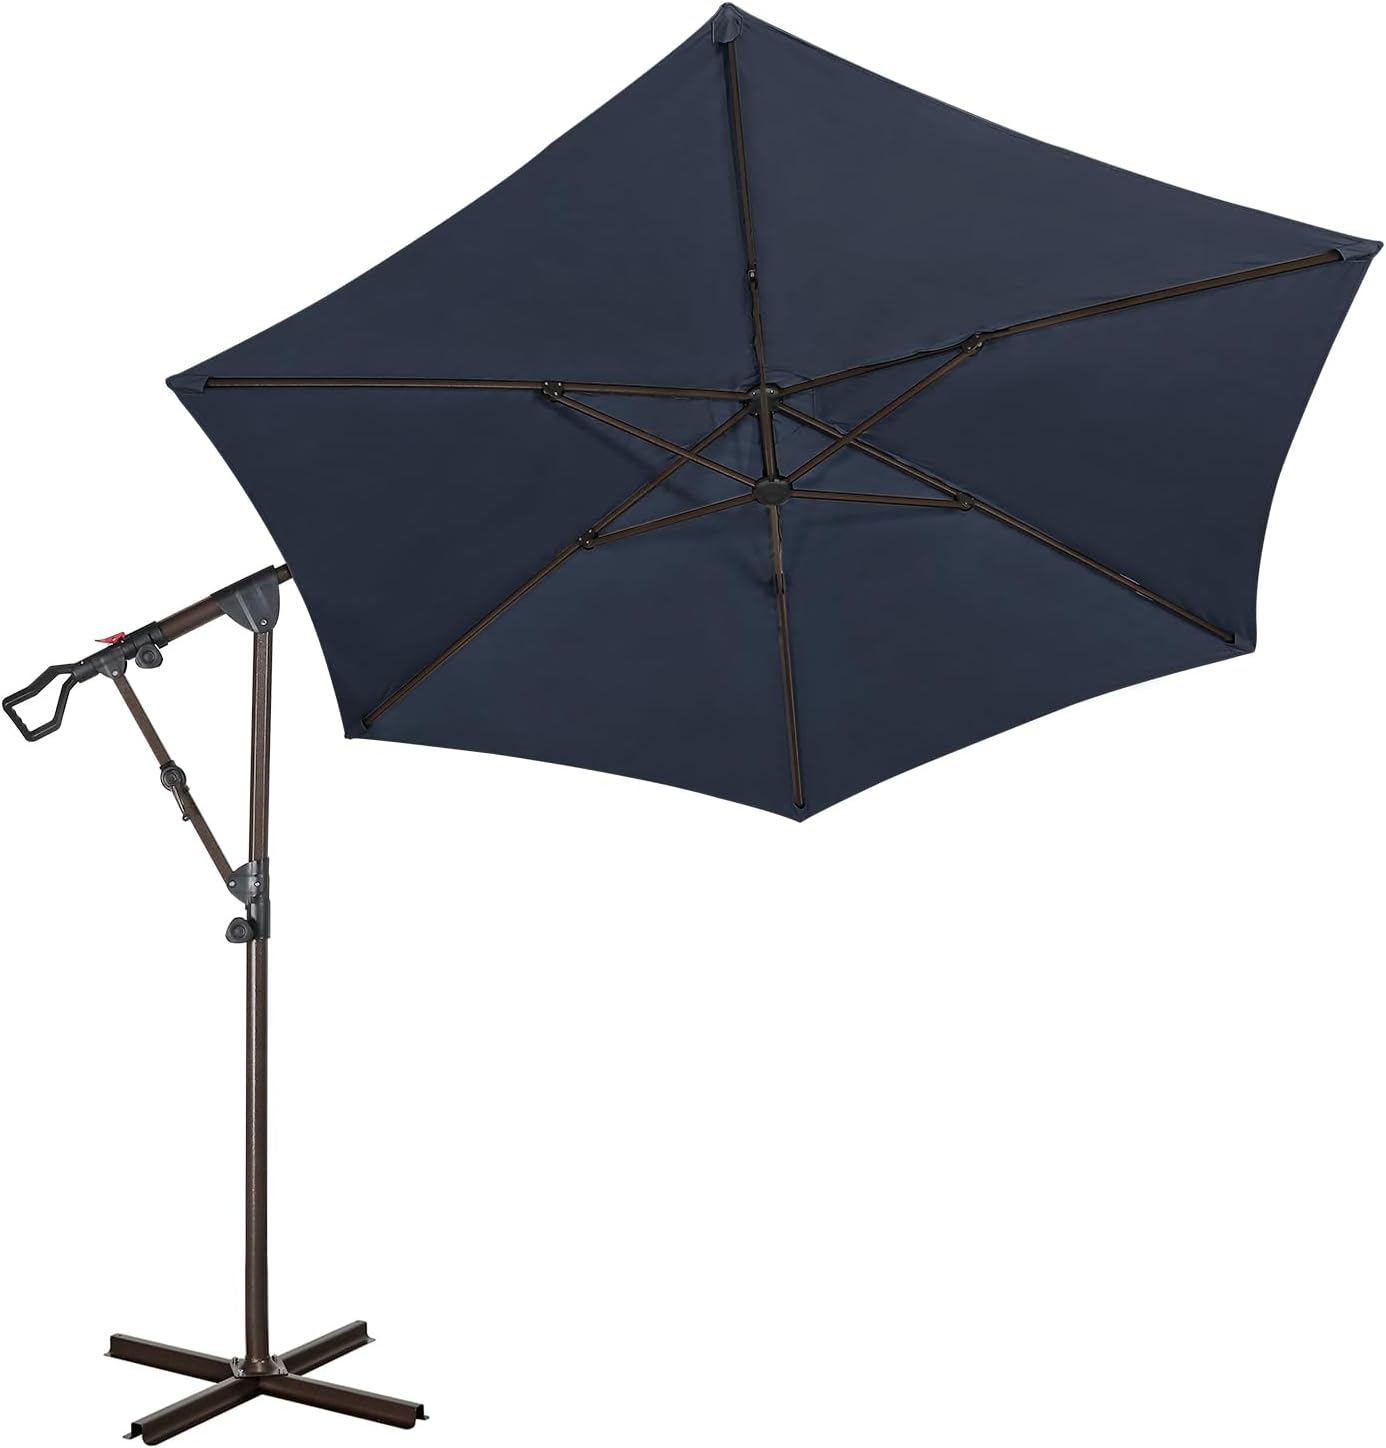 10Ft Patio Umbrella, Outdoor Cantilever Aluminum Umbrella with 360°Rotation,5 Colors